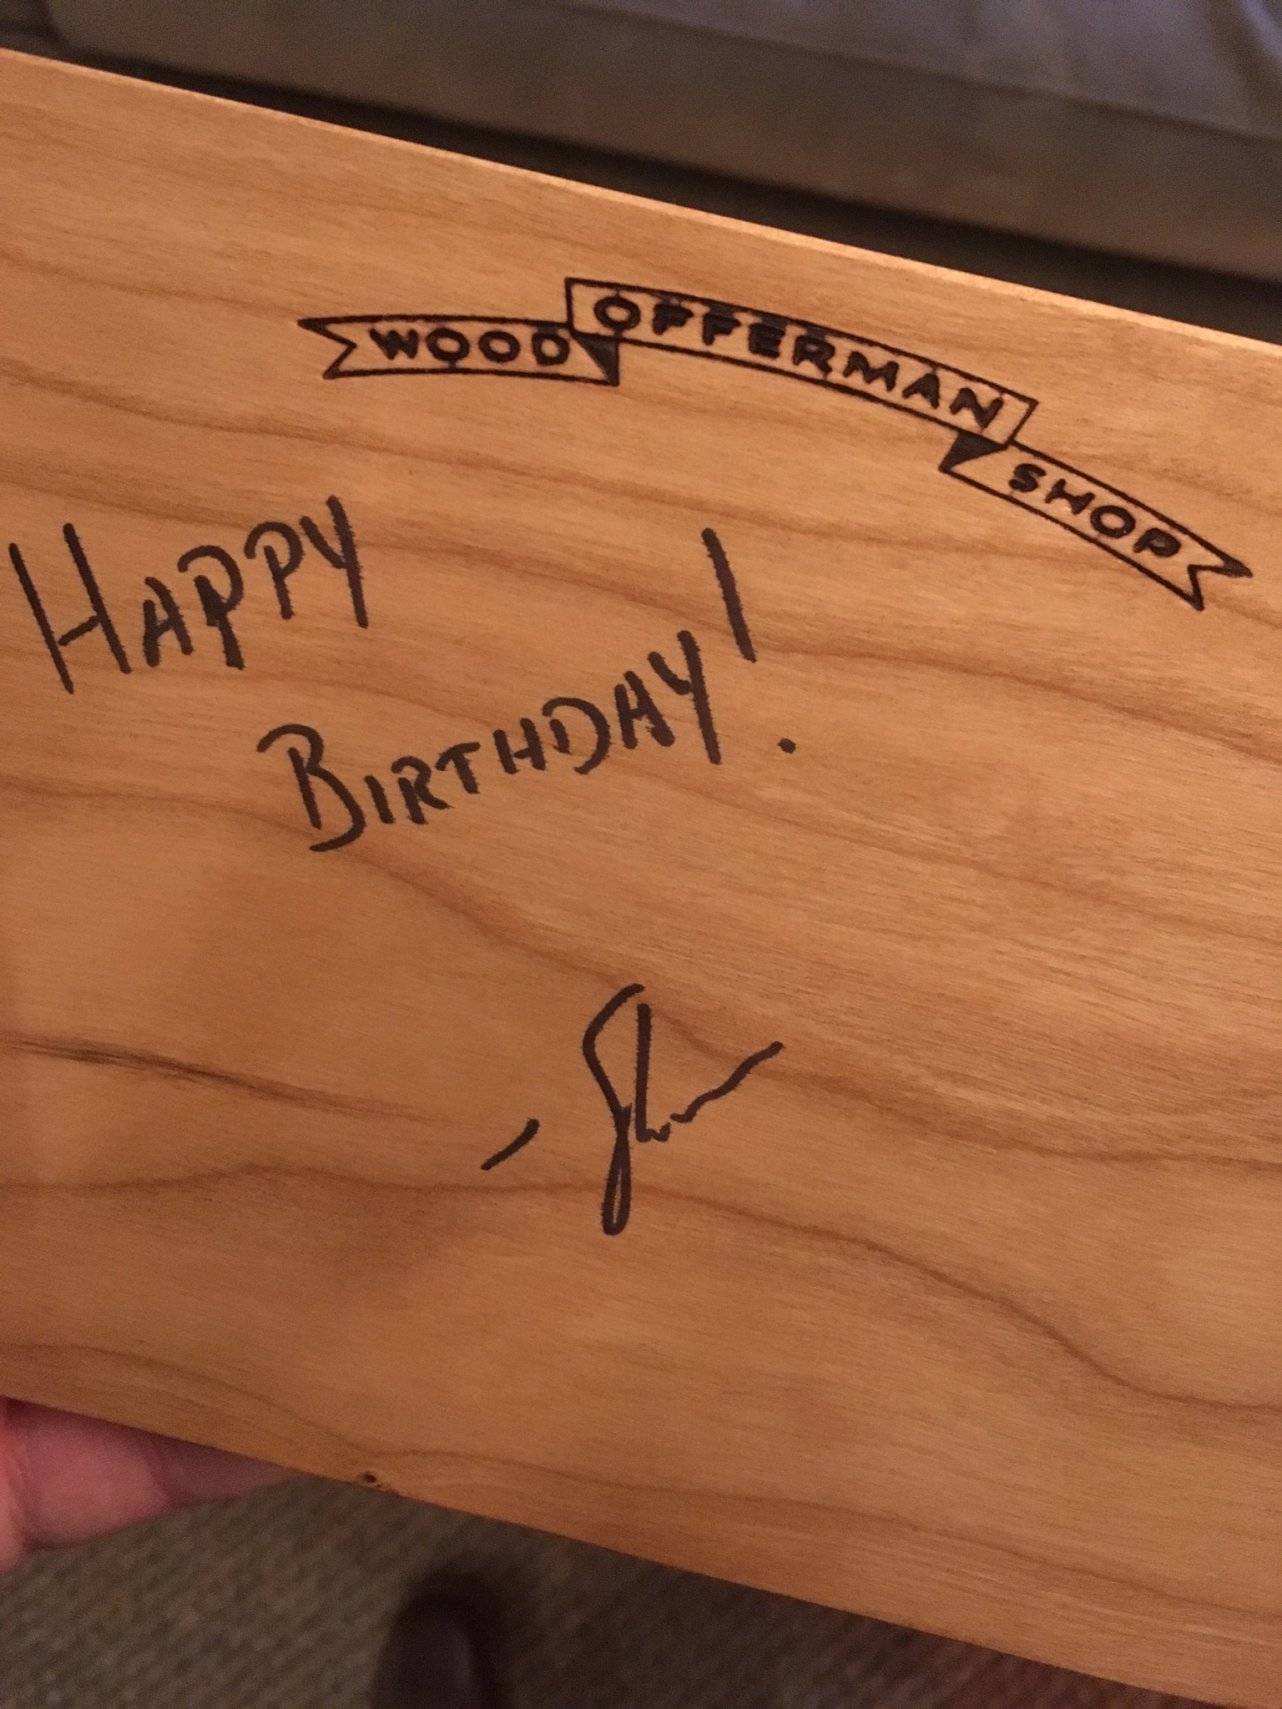 plywood - swood Opperma Erman Shop Happy Birthday!